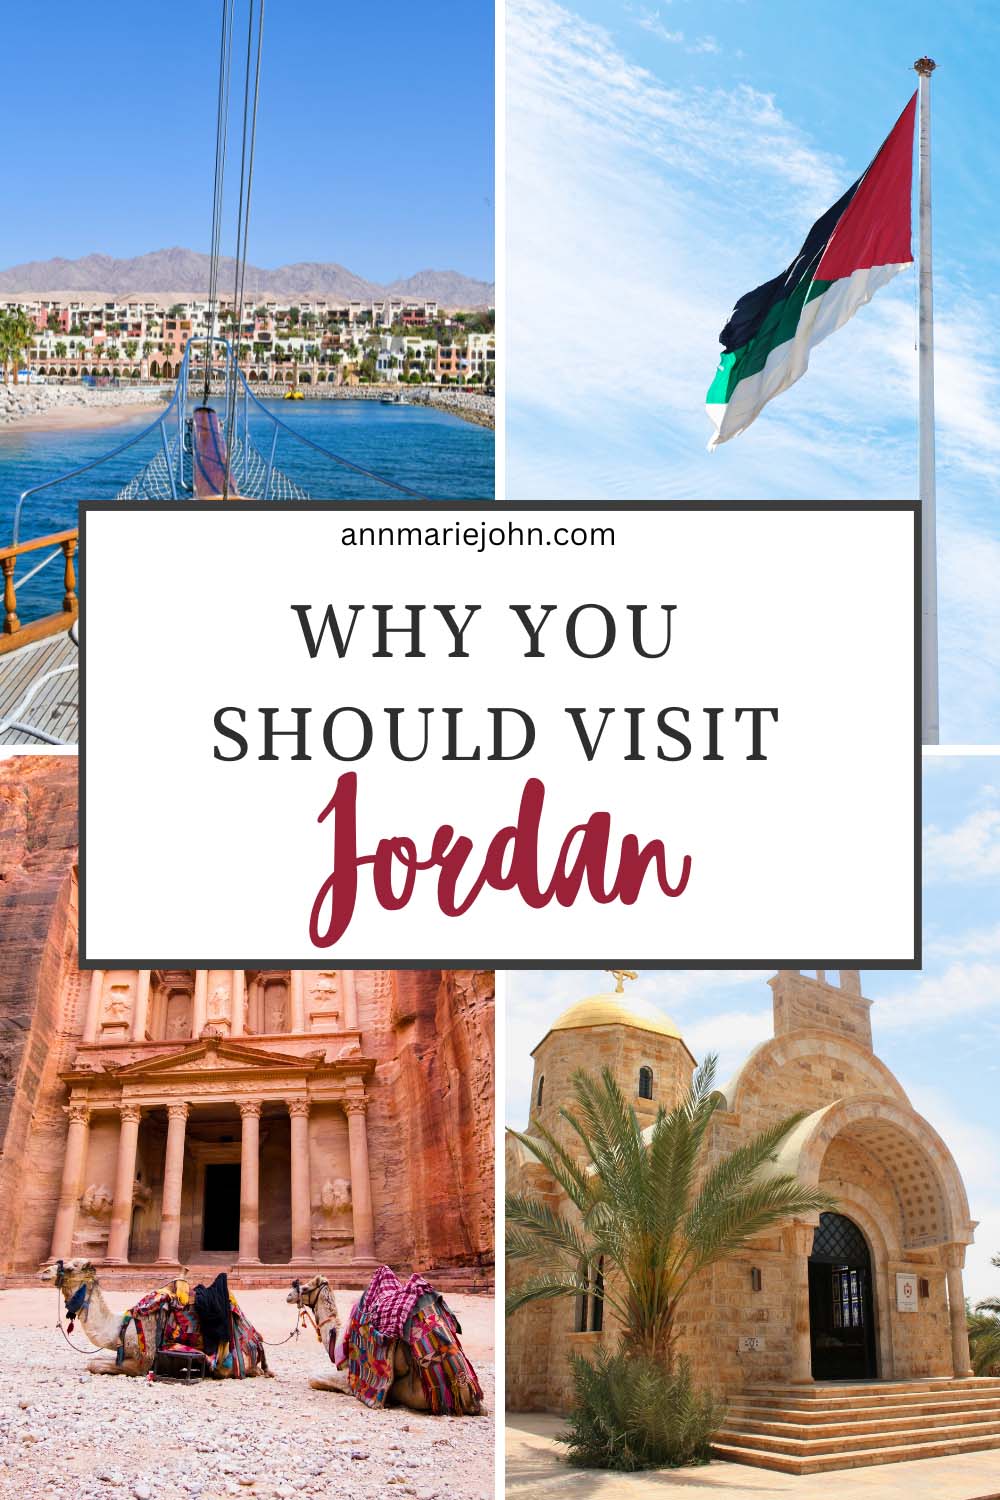 Why You Should Visit Jordan